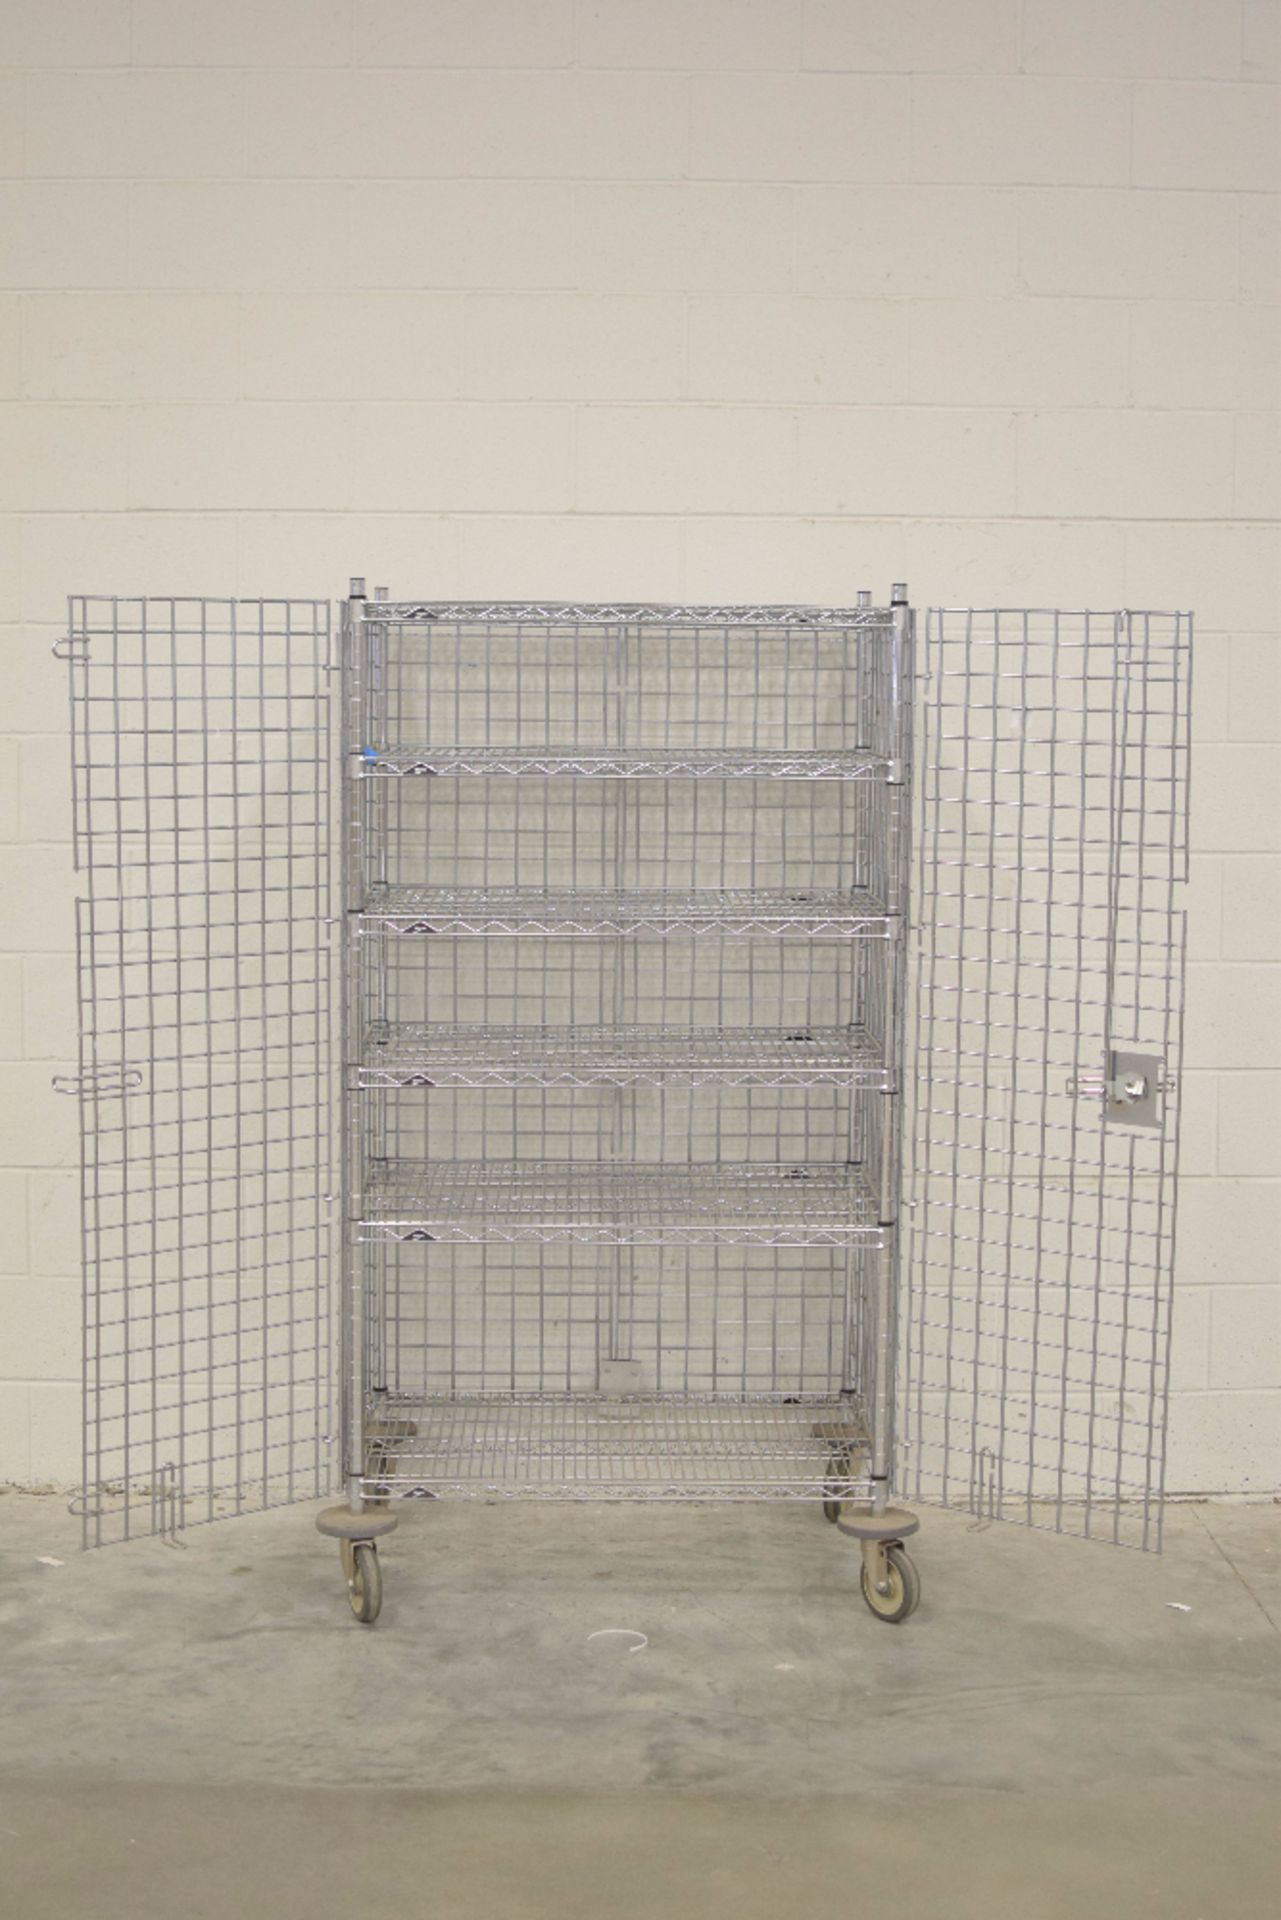 3' Portable Metro Storage Cage - Image 2 of 2